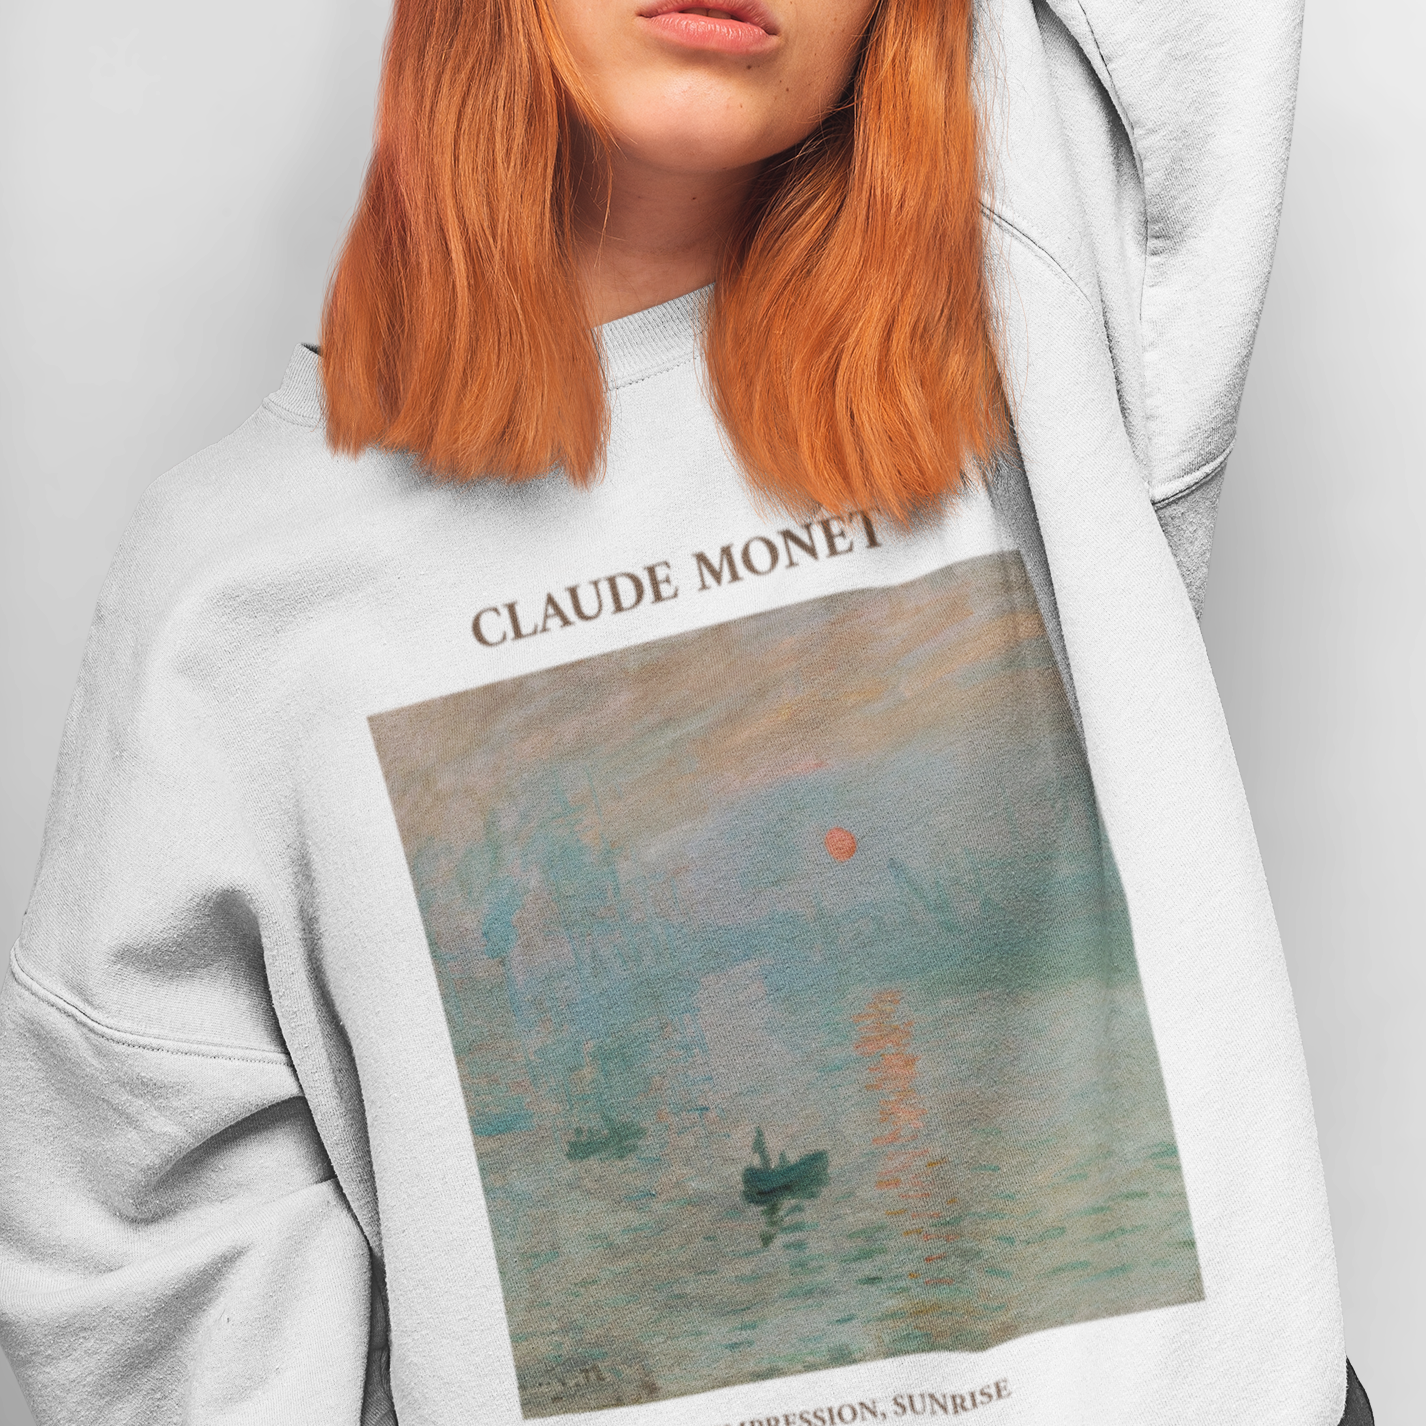 Claude Monet Impression, Sunrise Sweatshirt